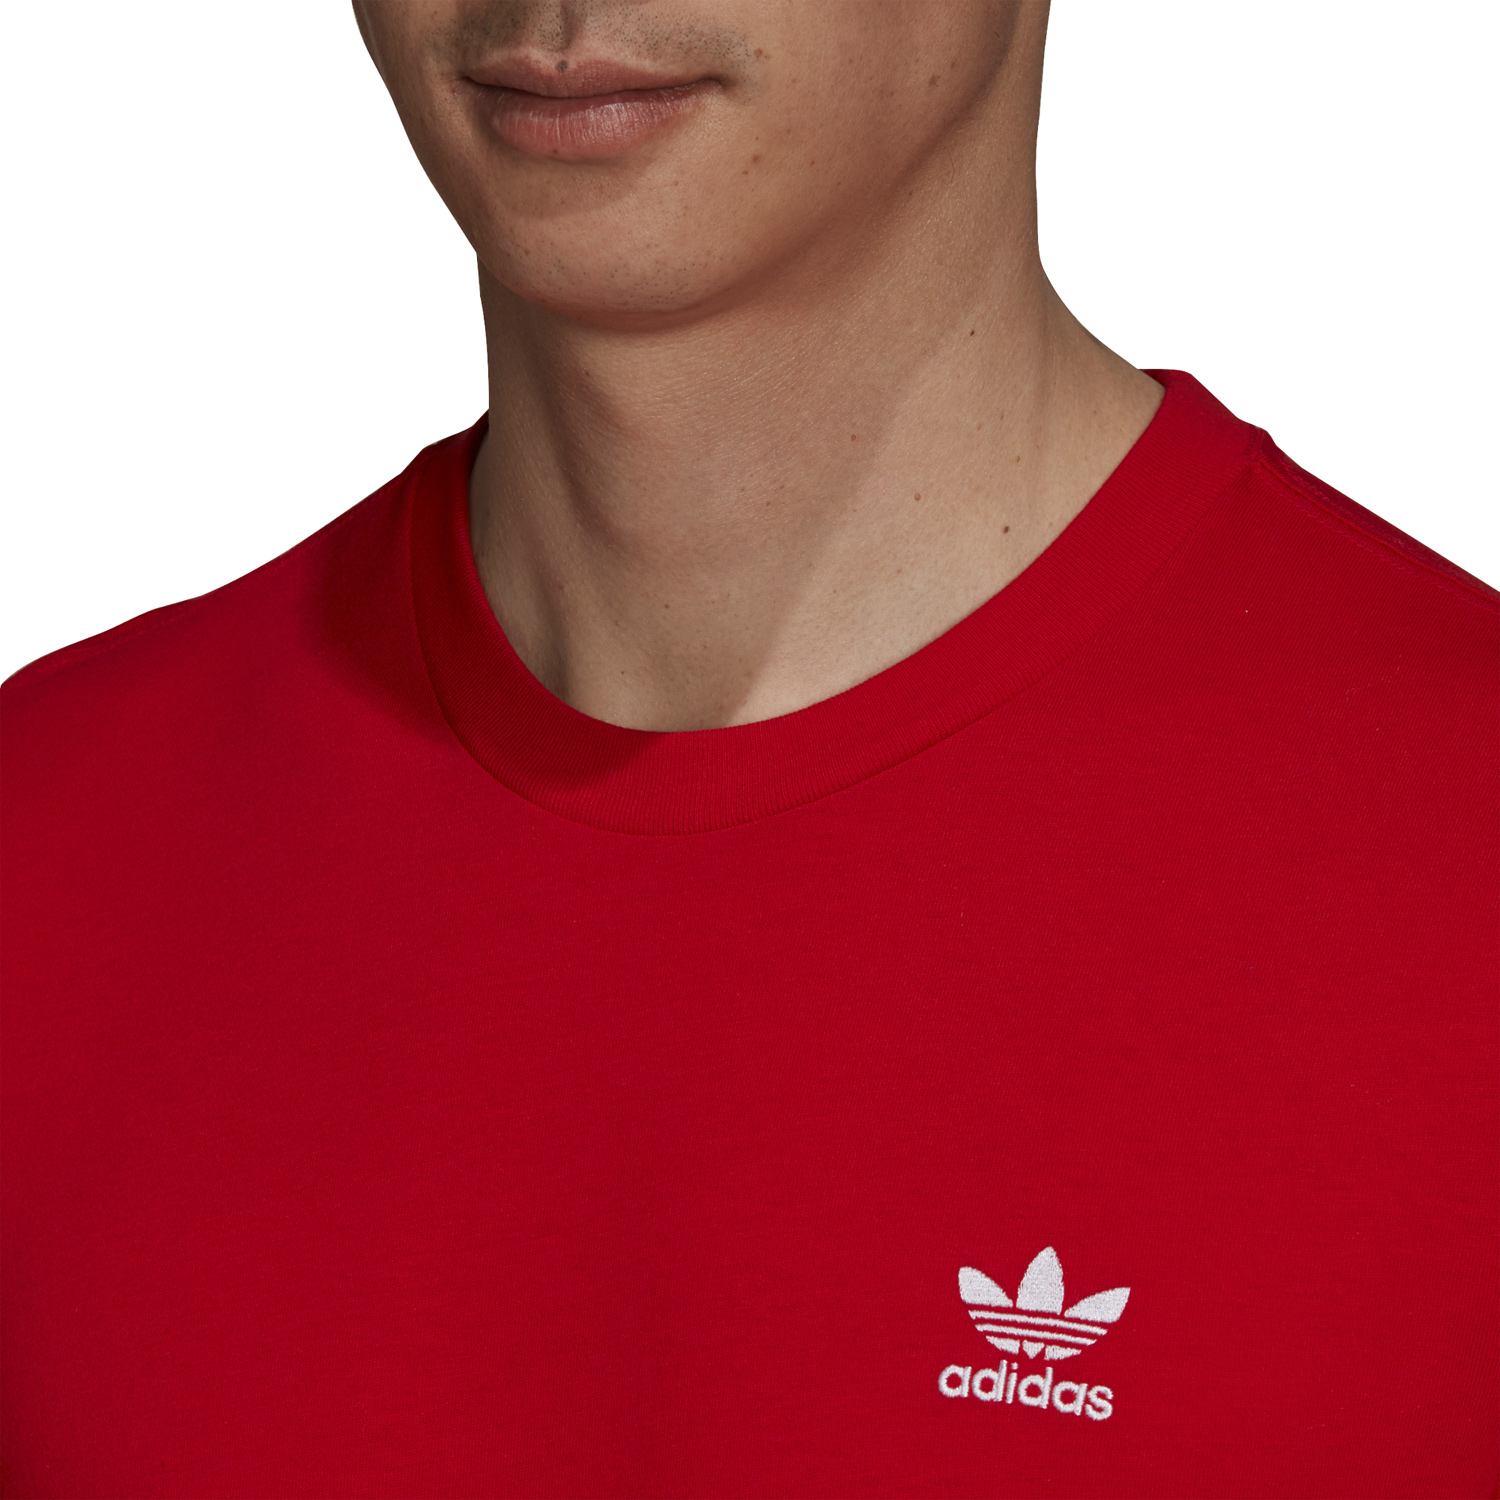 adidas-red-essential-trefoil-t-shirt-2